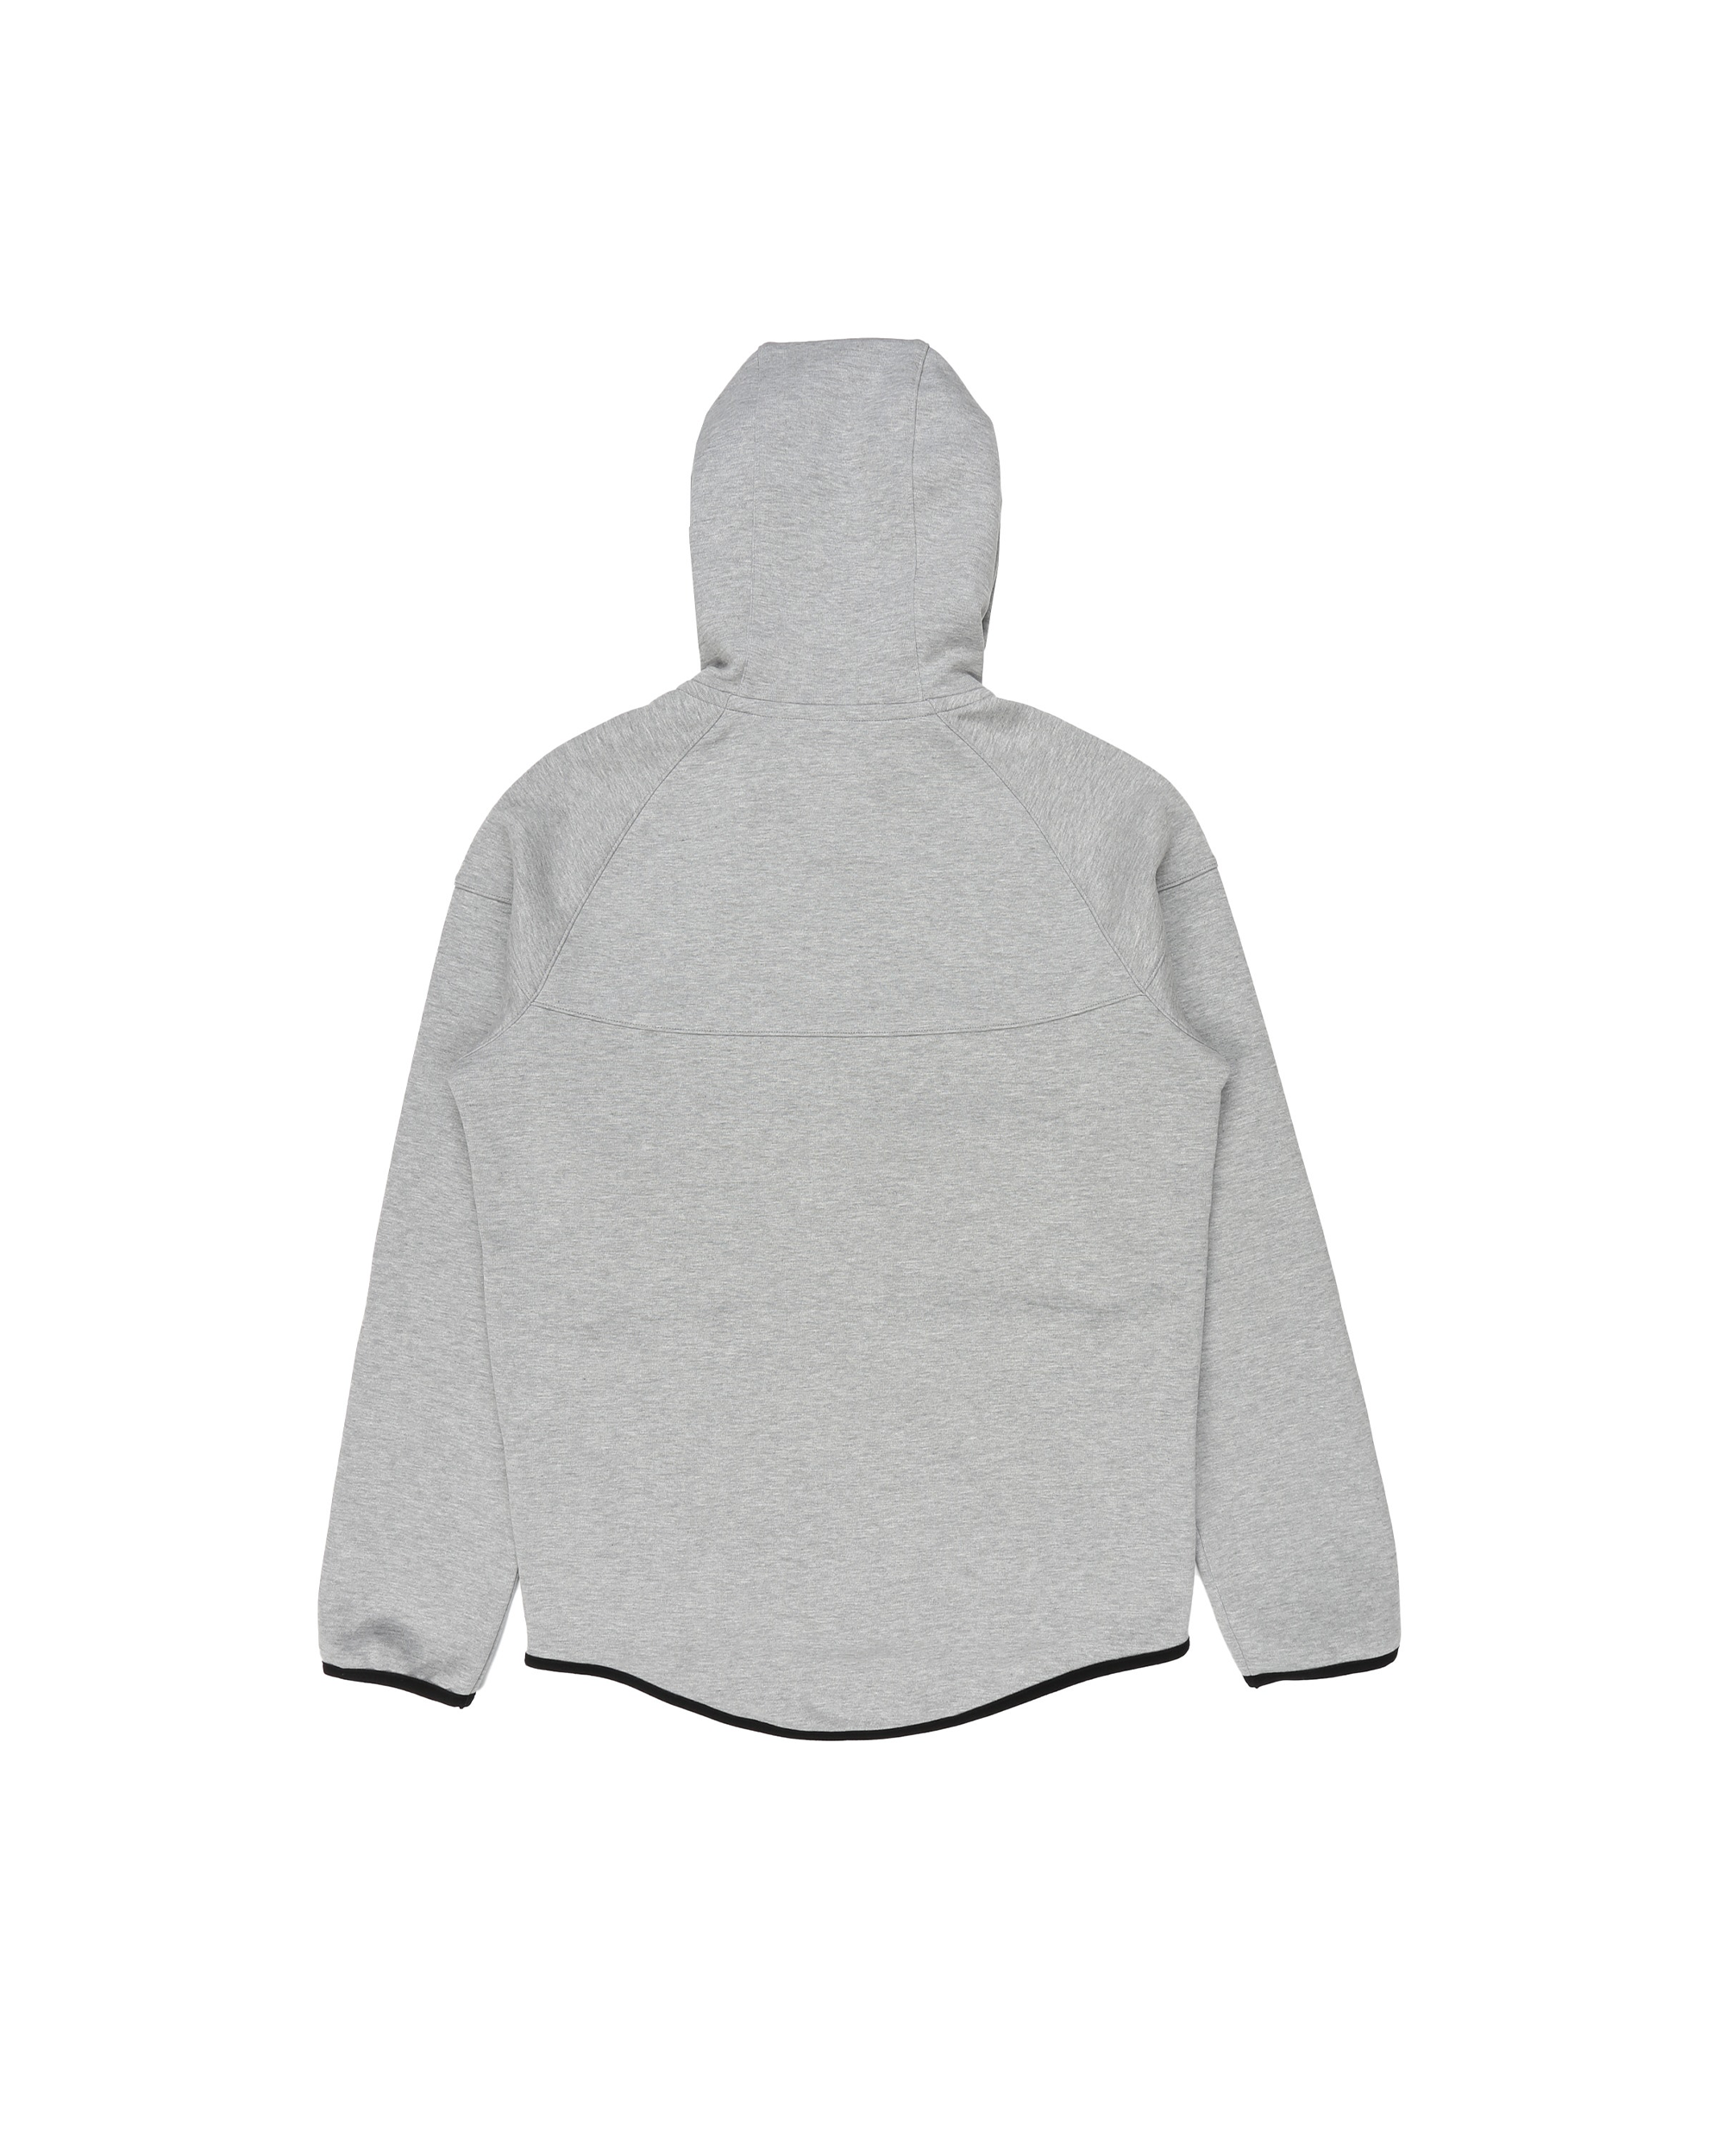 Tech Fleece OG Hooded Jacket - DK GREY HEATHER / BLACK